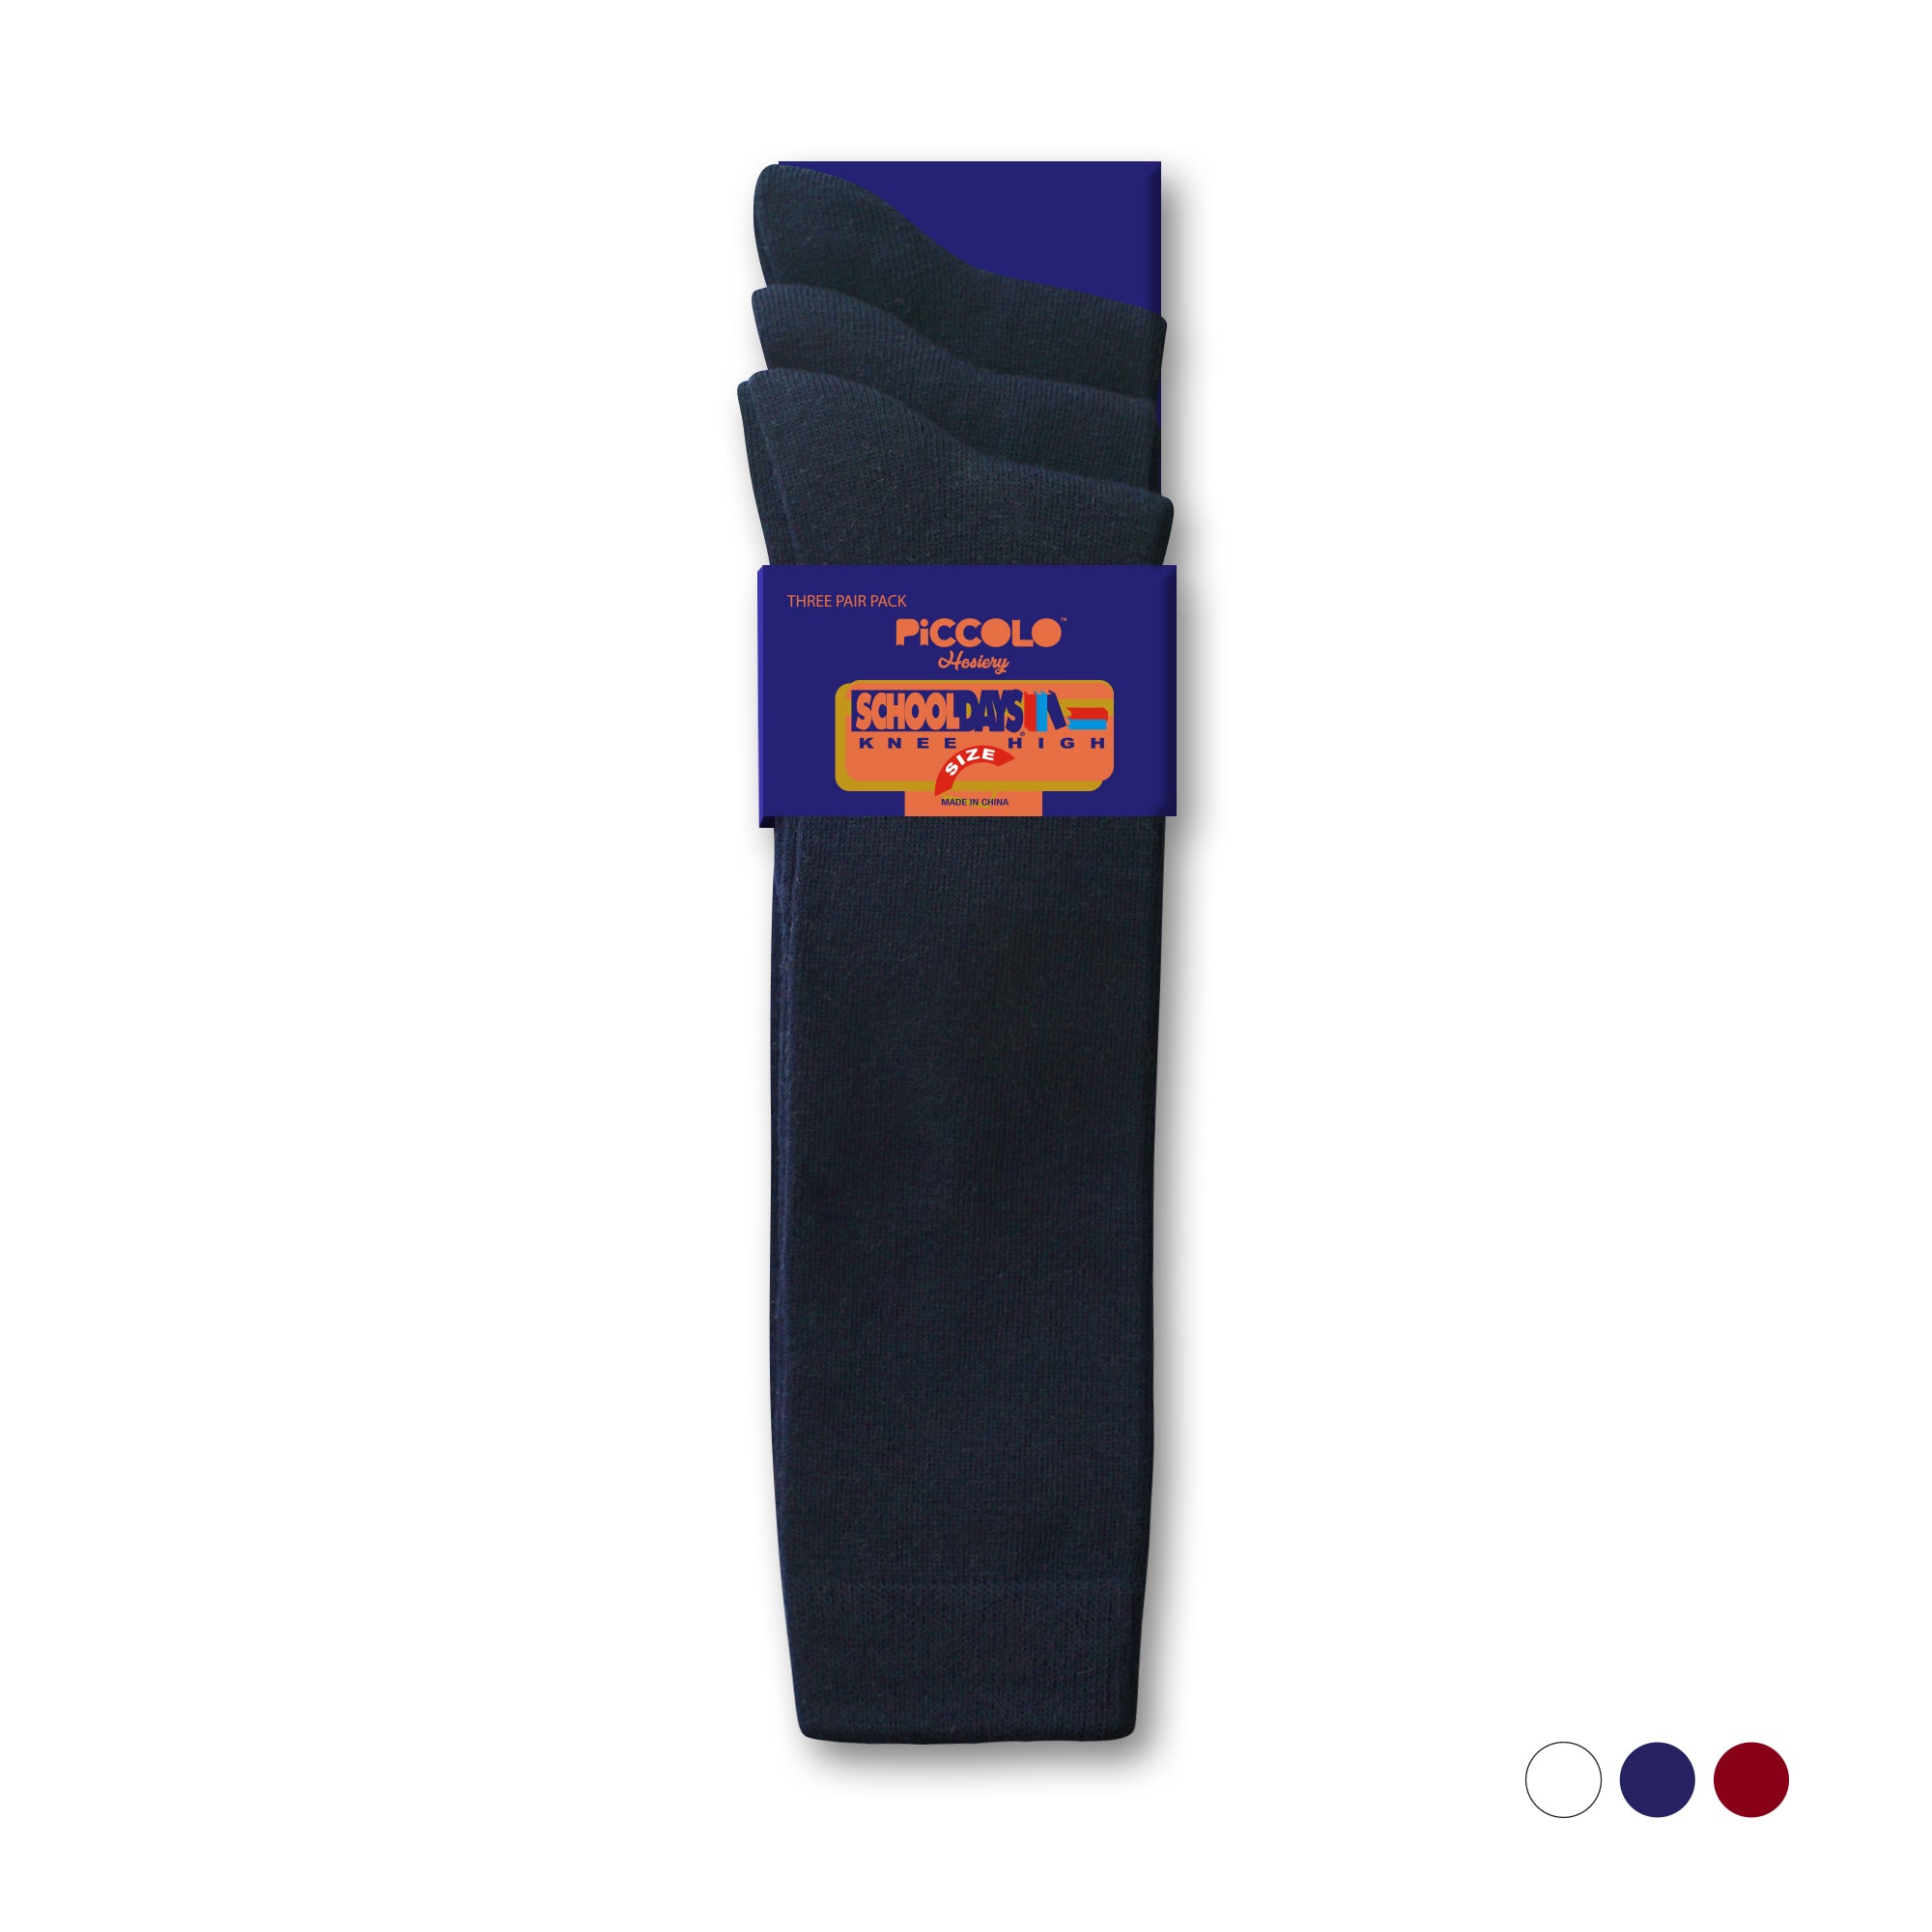 Flat Knit Cotton Knee High Socks - 3 Pair Pack - Style: 4002FM